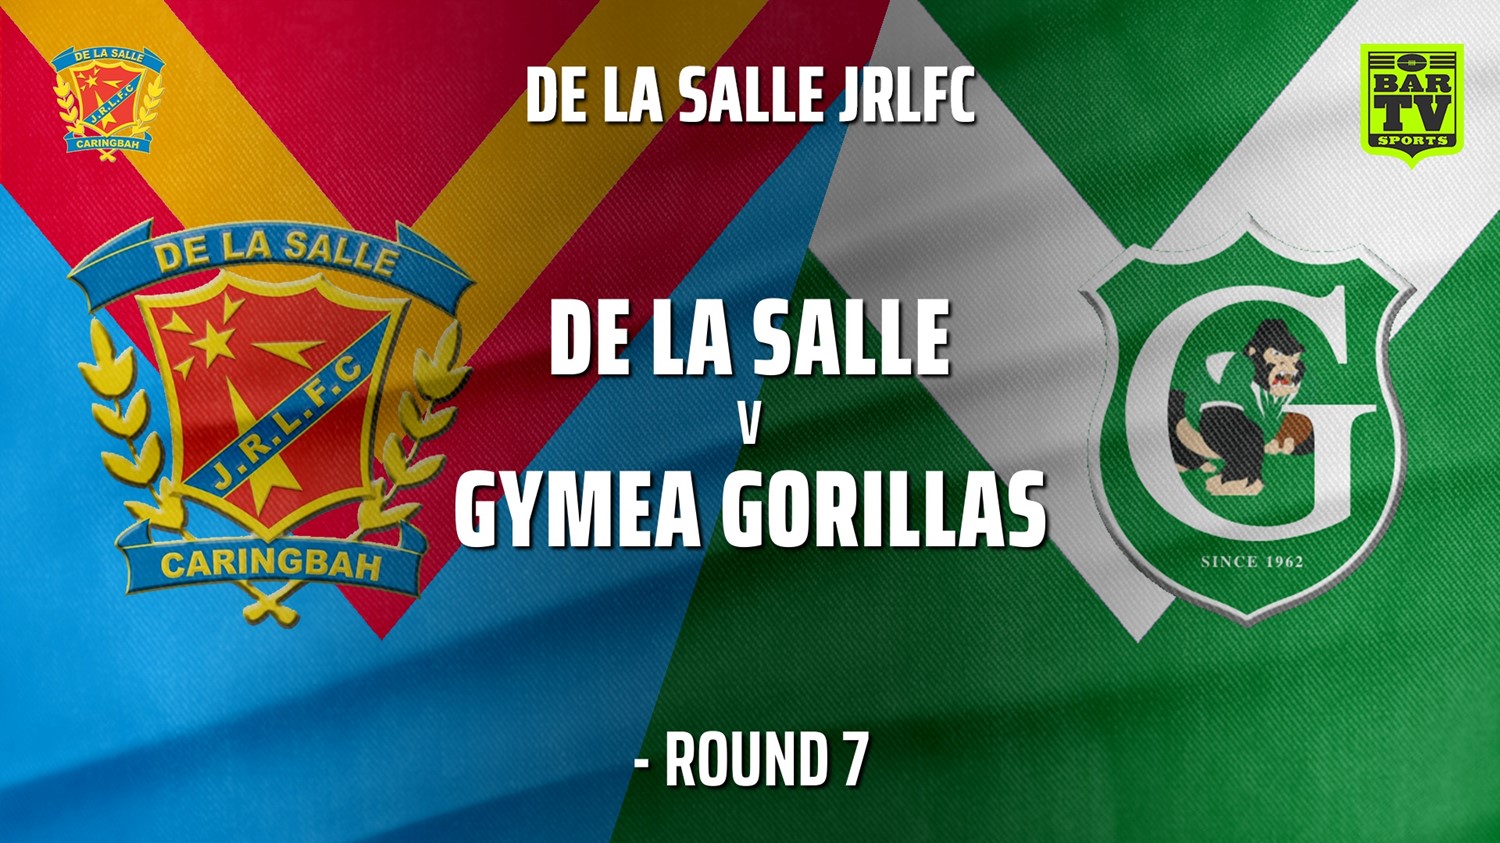 210620-De La Salle (Cronulla) - Under 16 Gold - Round 7 - De La Salle v Gymea Gorillas Slate Image